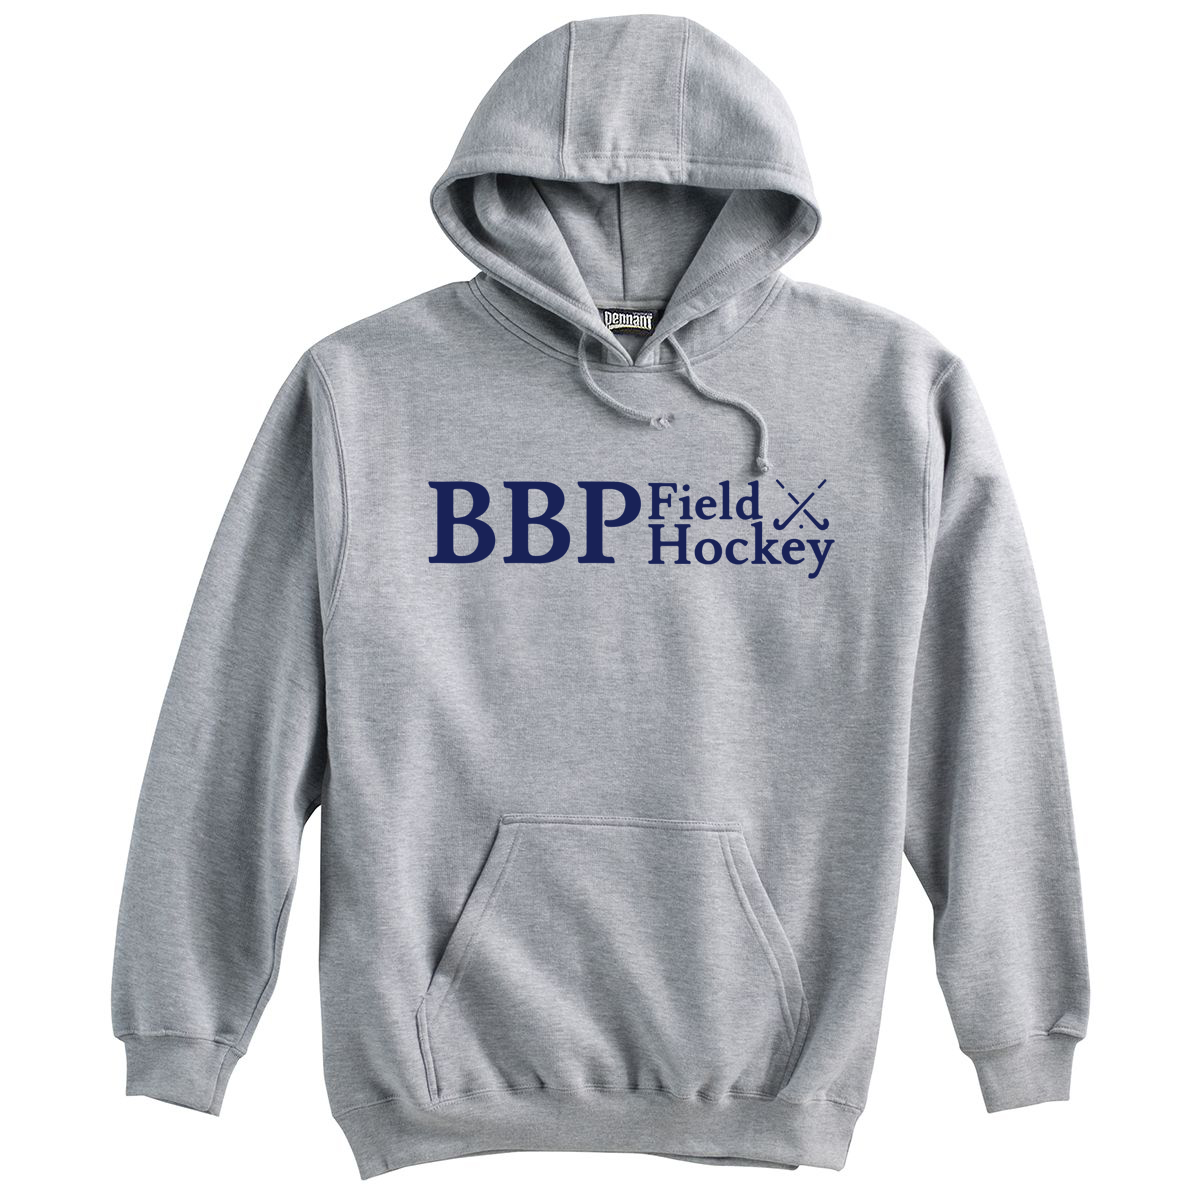 BBP Field Hockey Sweatshirt